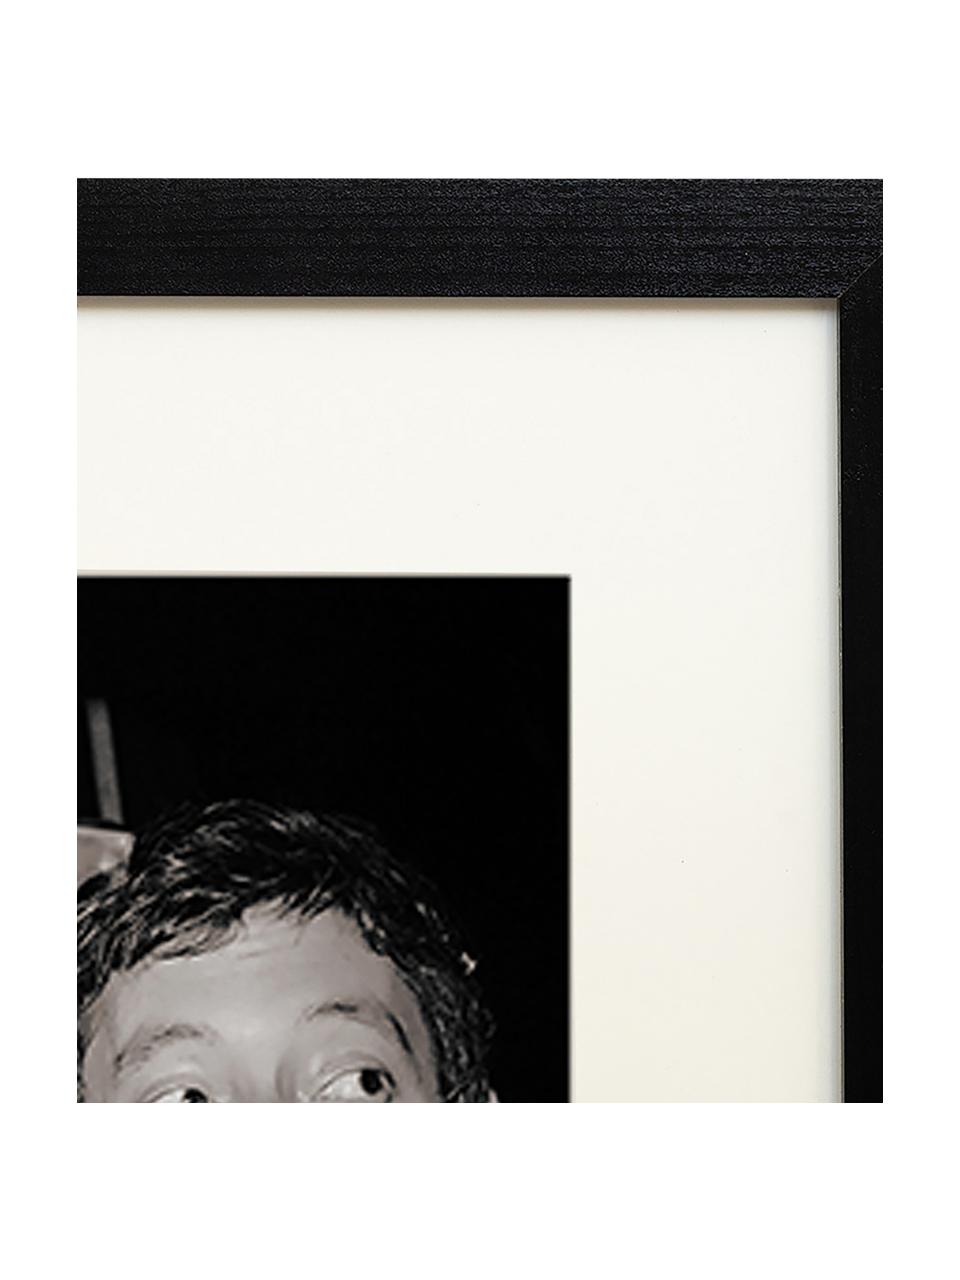 Fotografia incorniciata Serge Gainsbourg & Jane Birkin, Cornice: legno di faggio, Immagine: stampa digitale su carta,, Nero, bianco latte, Larg. 33 x Alt. 43 cm